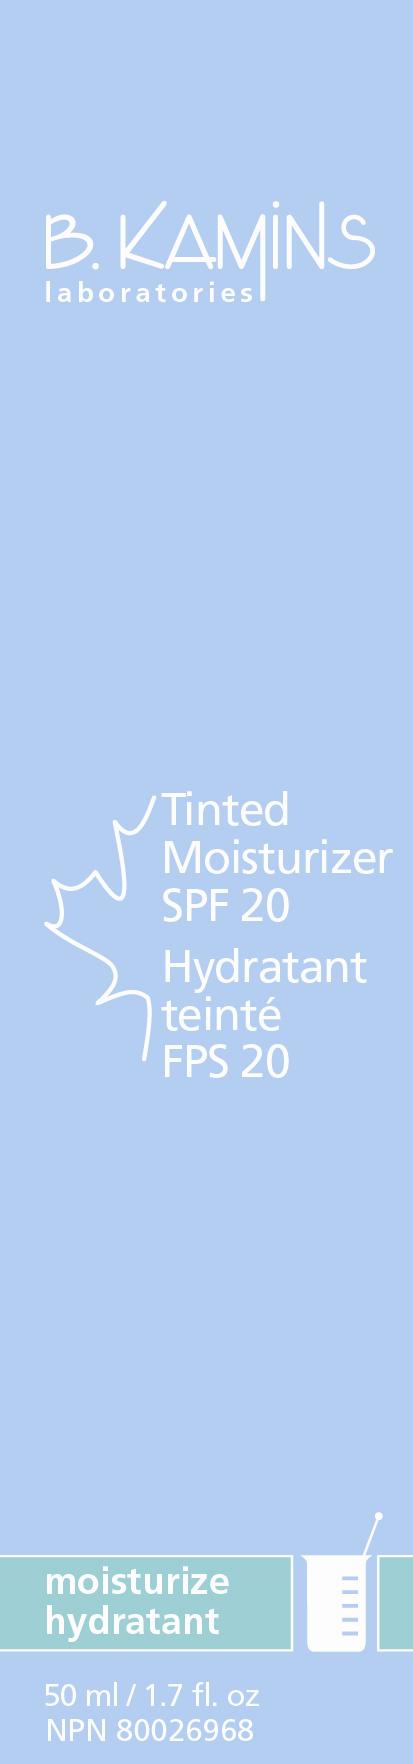 Tinted Moisturizer front panel image